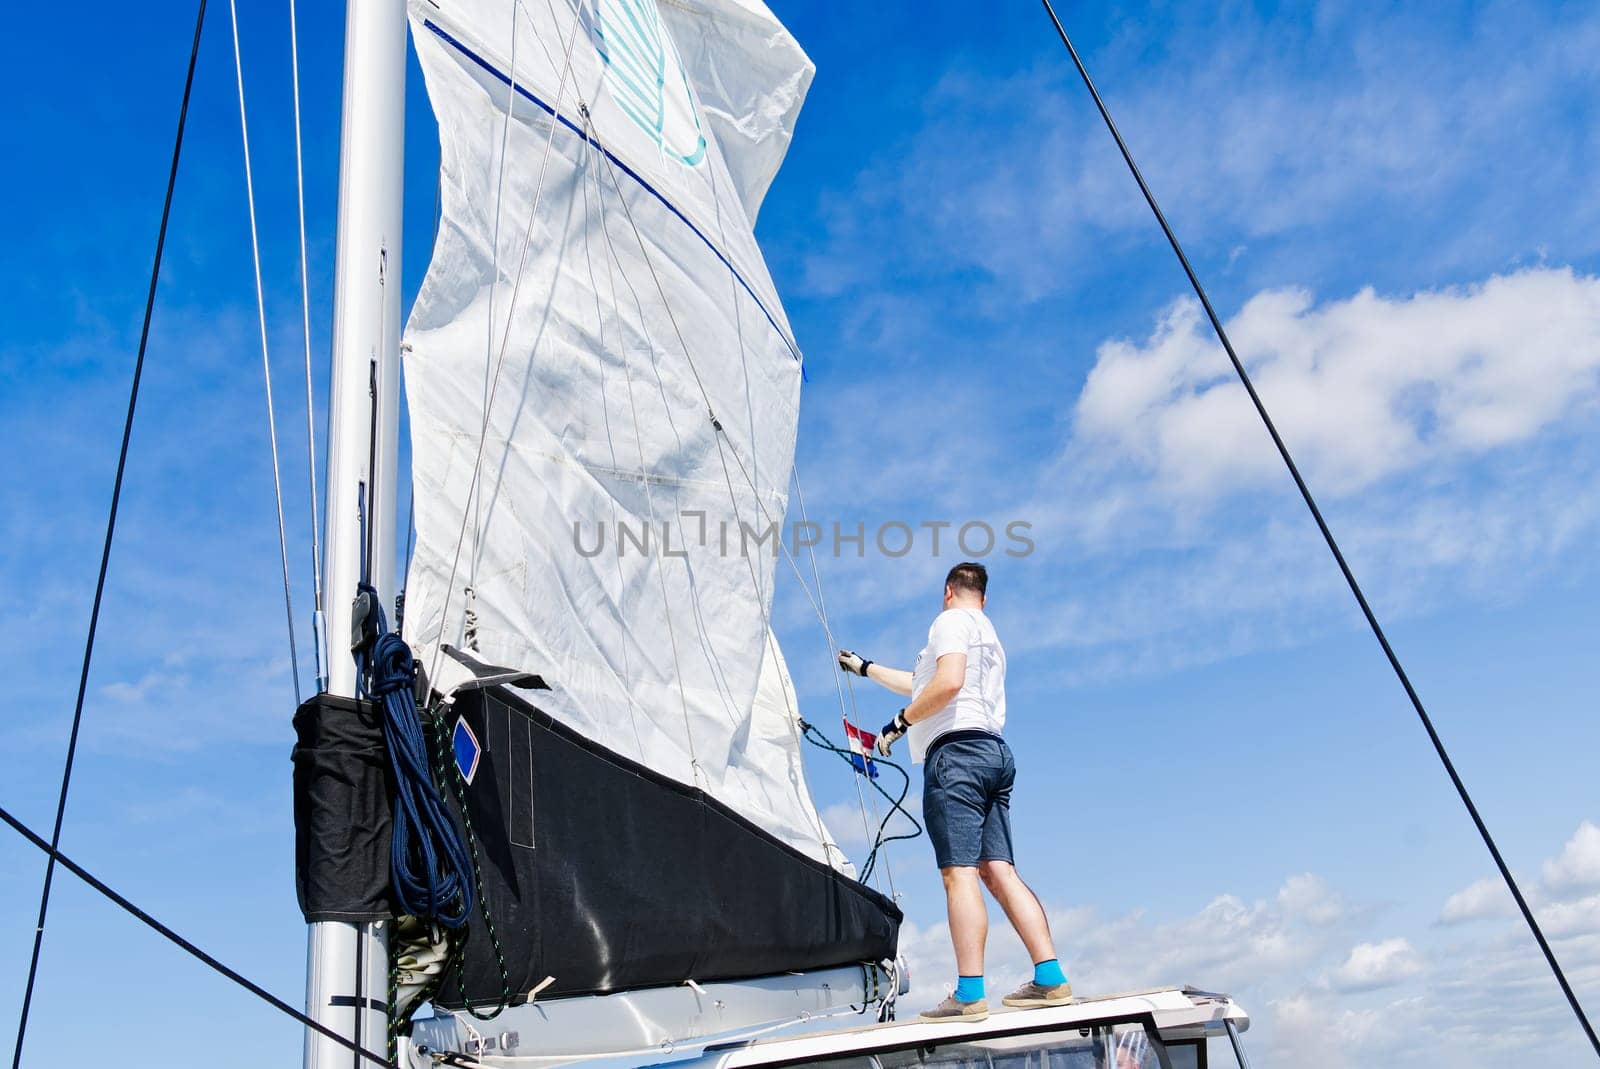 Raising the sail on a yacht. Young man captan lifting the sail of catamaran yacht during cruising by PhotoTime